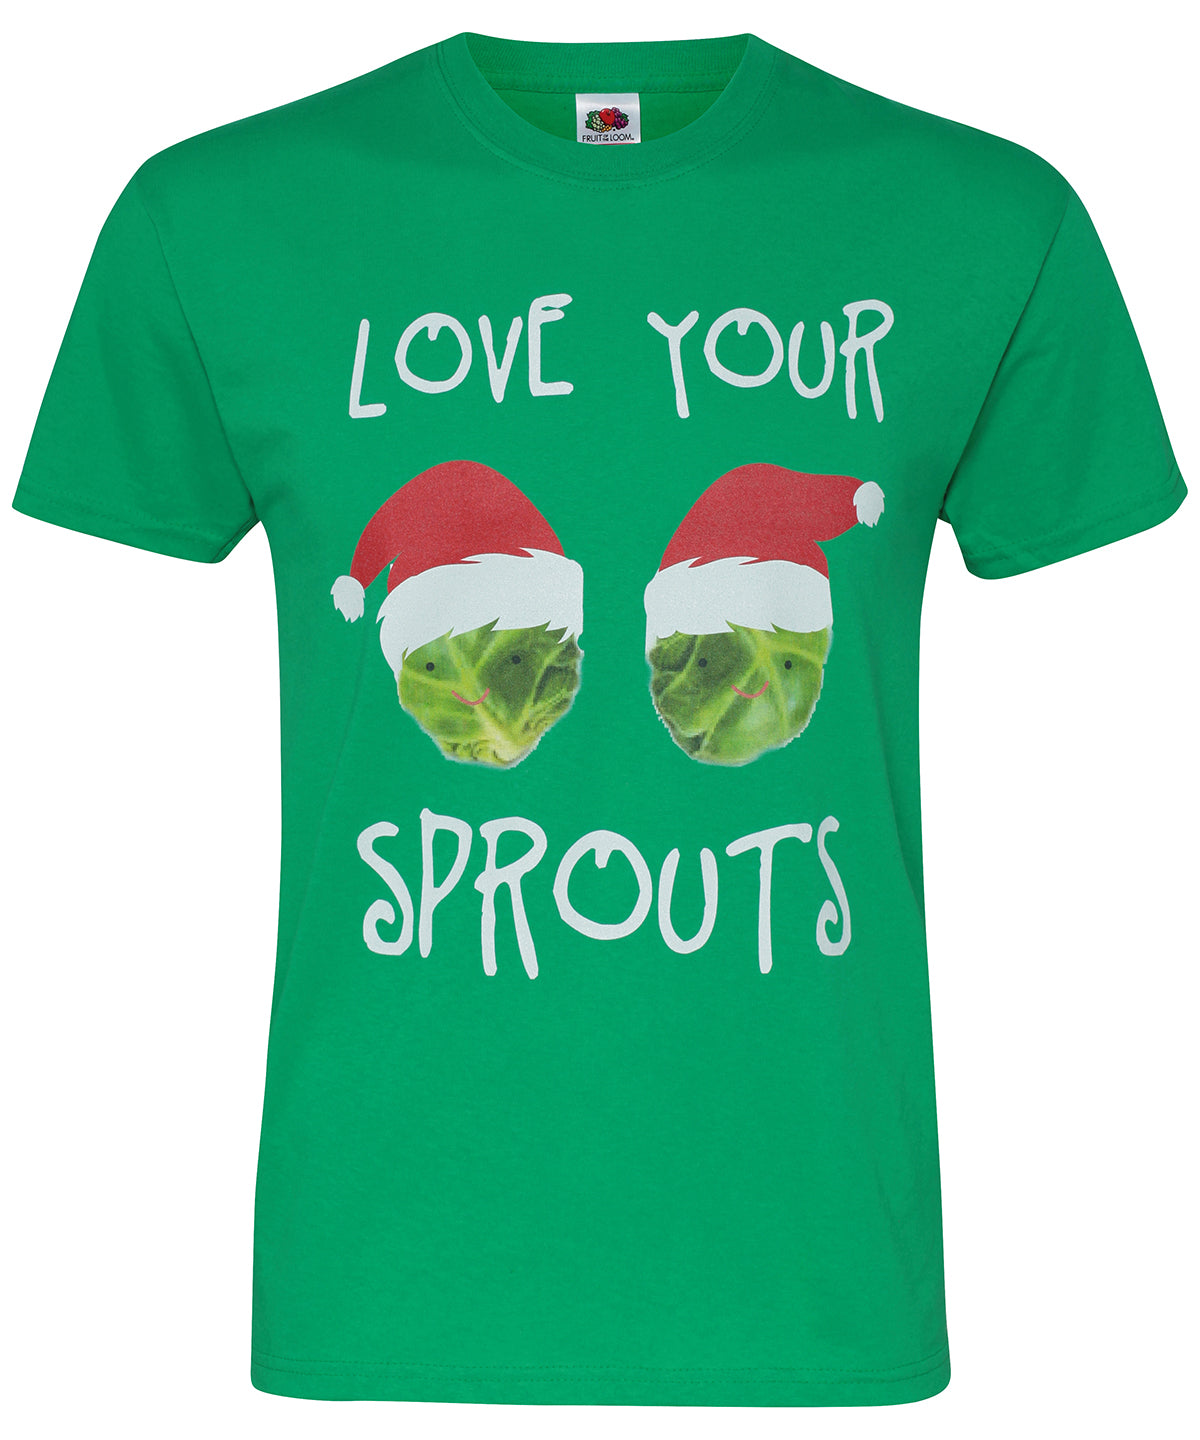 Stuttermabolir - Men's "Love Your Sprouts" Short Sleeve Tee